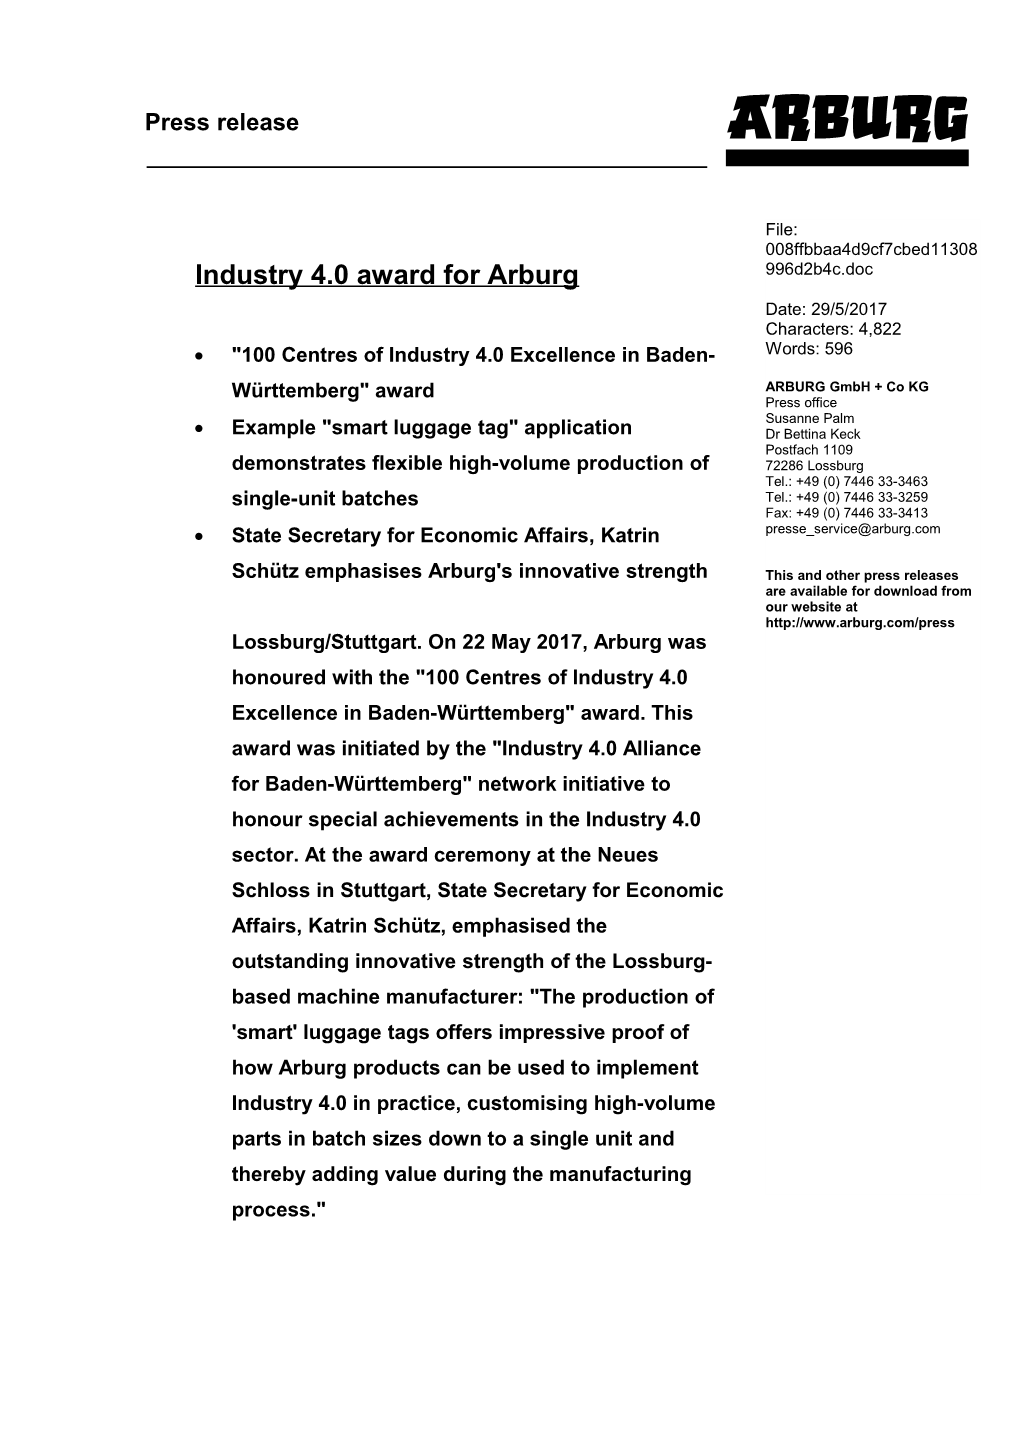 Industry 4.0 Award for Arburg